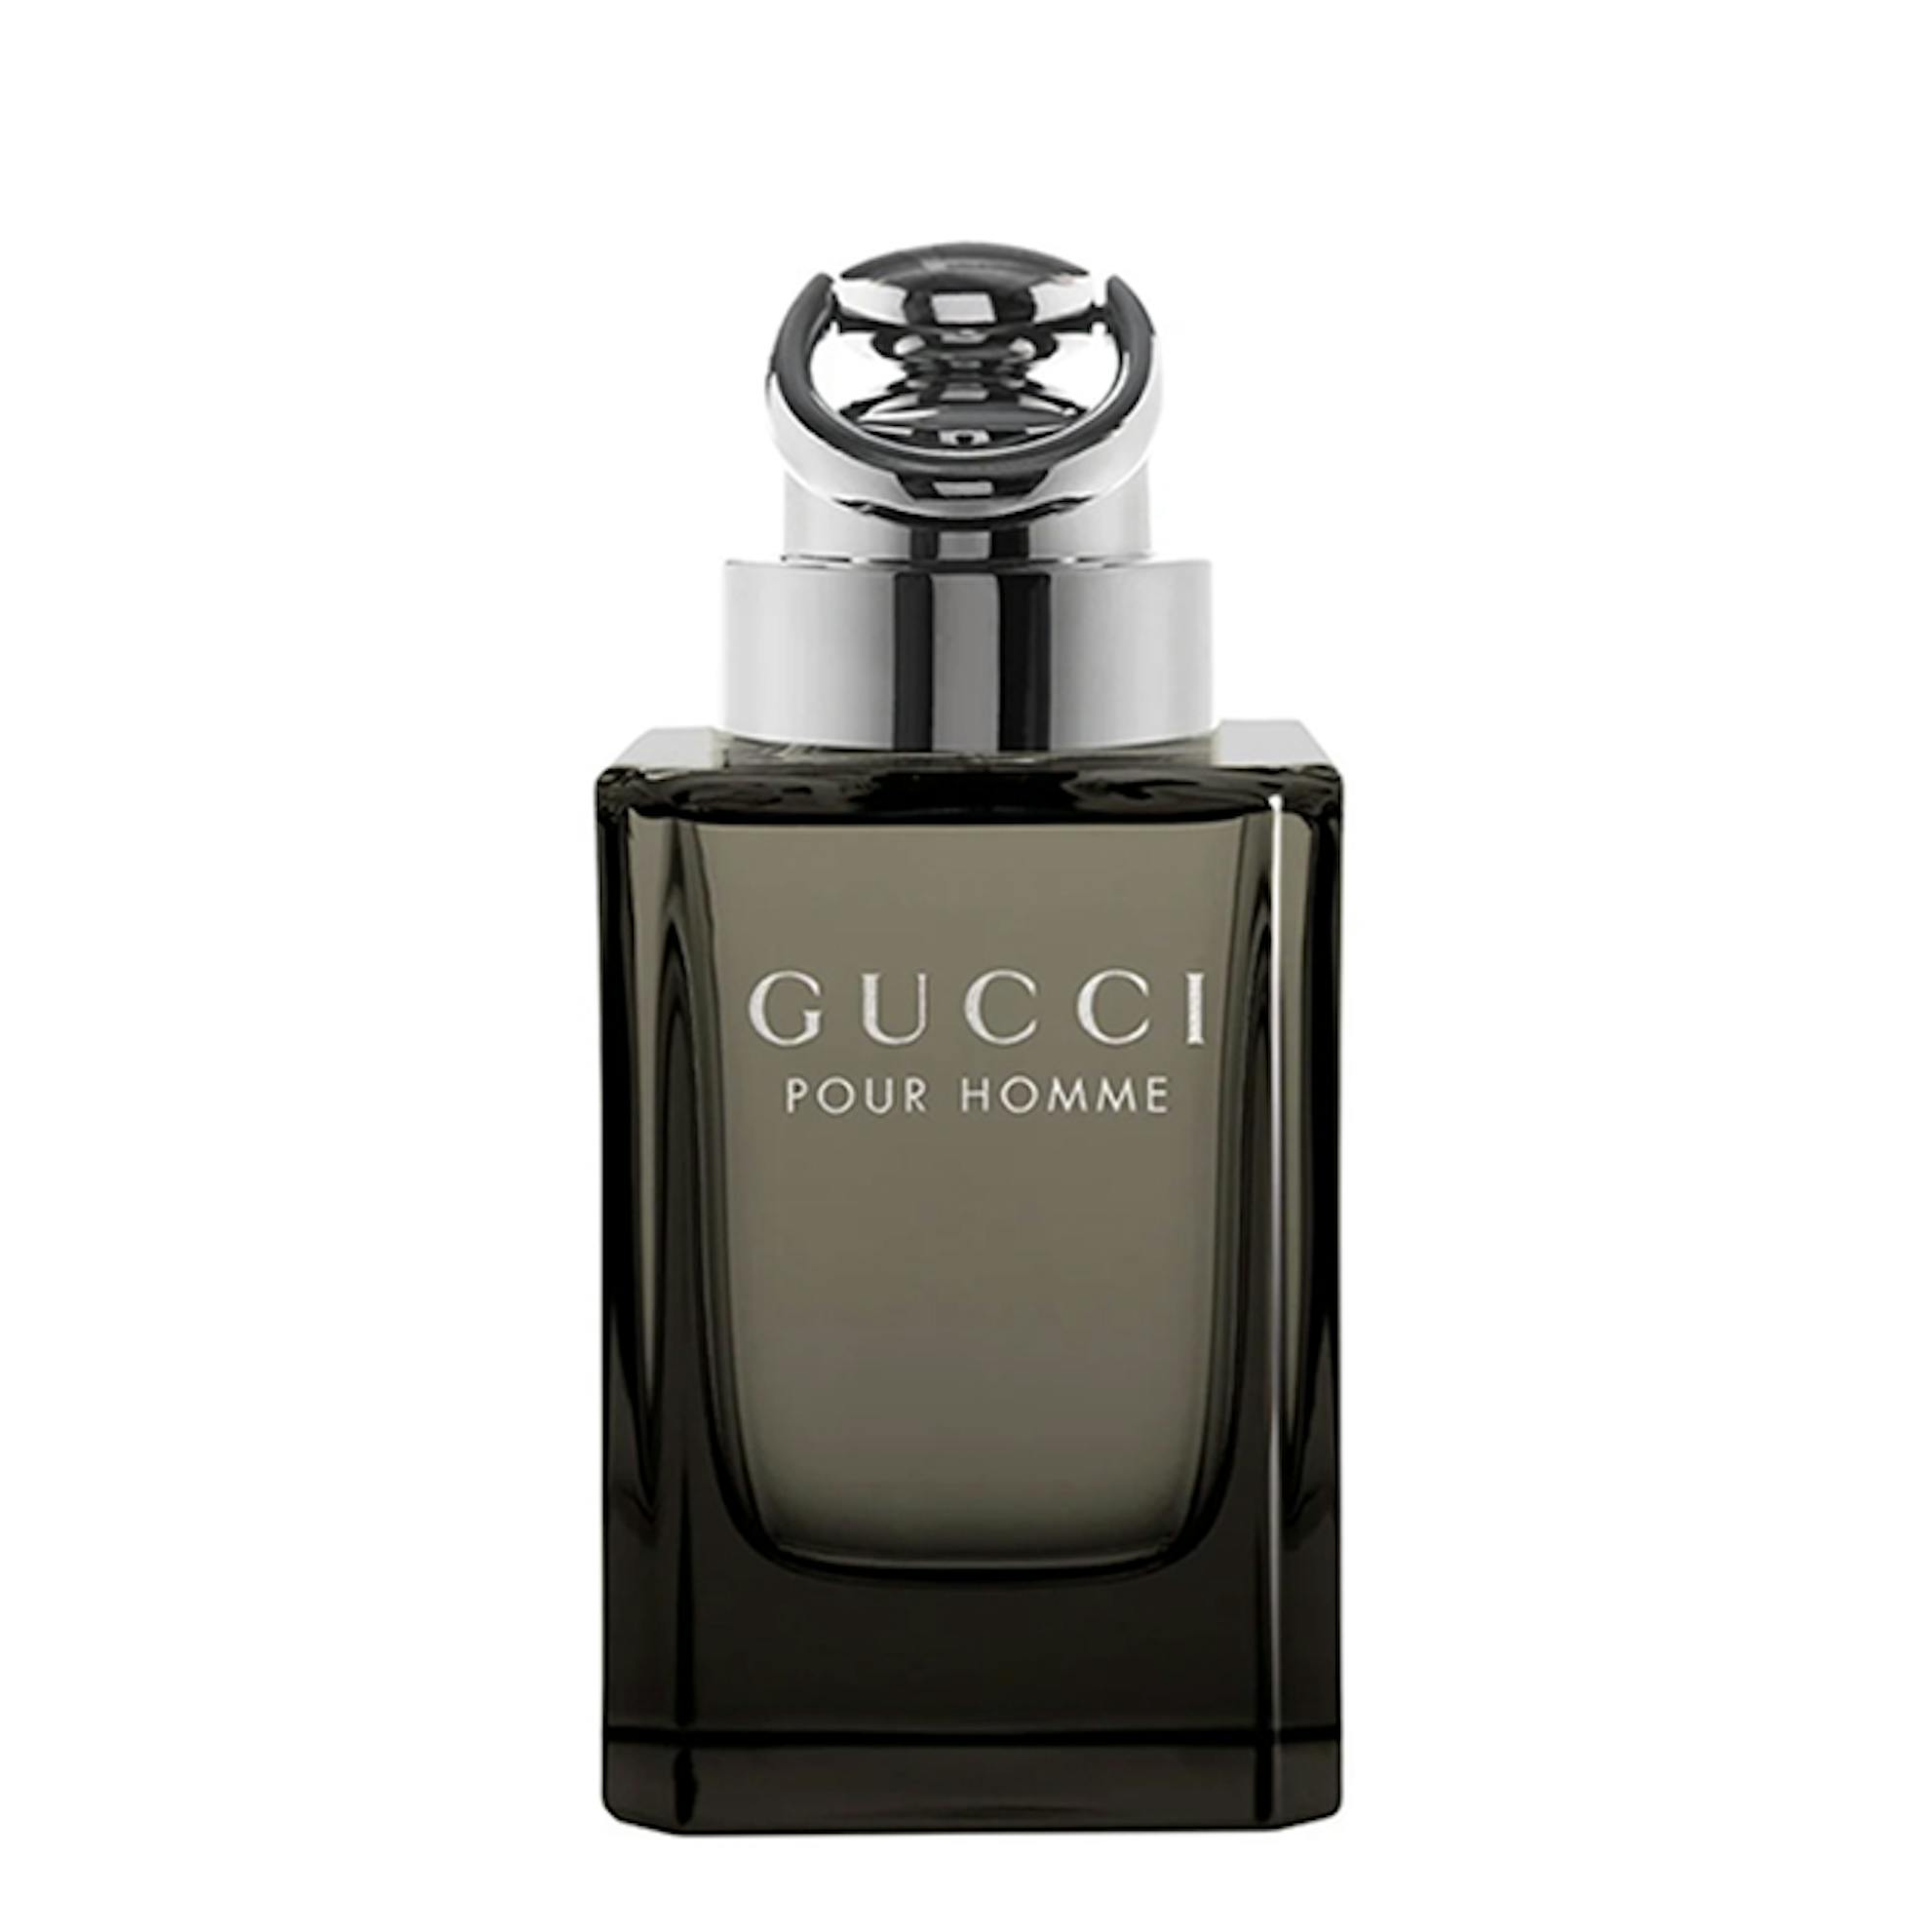 Gucci homme купить. Gucci "Gucci by Gucci pour homme". Gucci Gucci pour homme. Туалетная вода Gucci Gucci by Gucci pour homme. Gucci pour homme мужские.